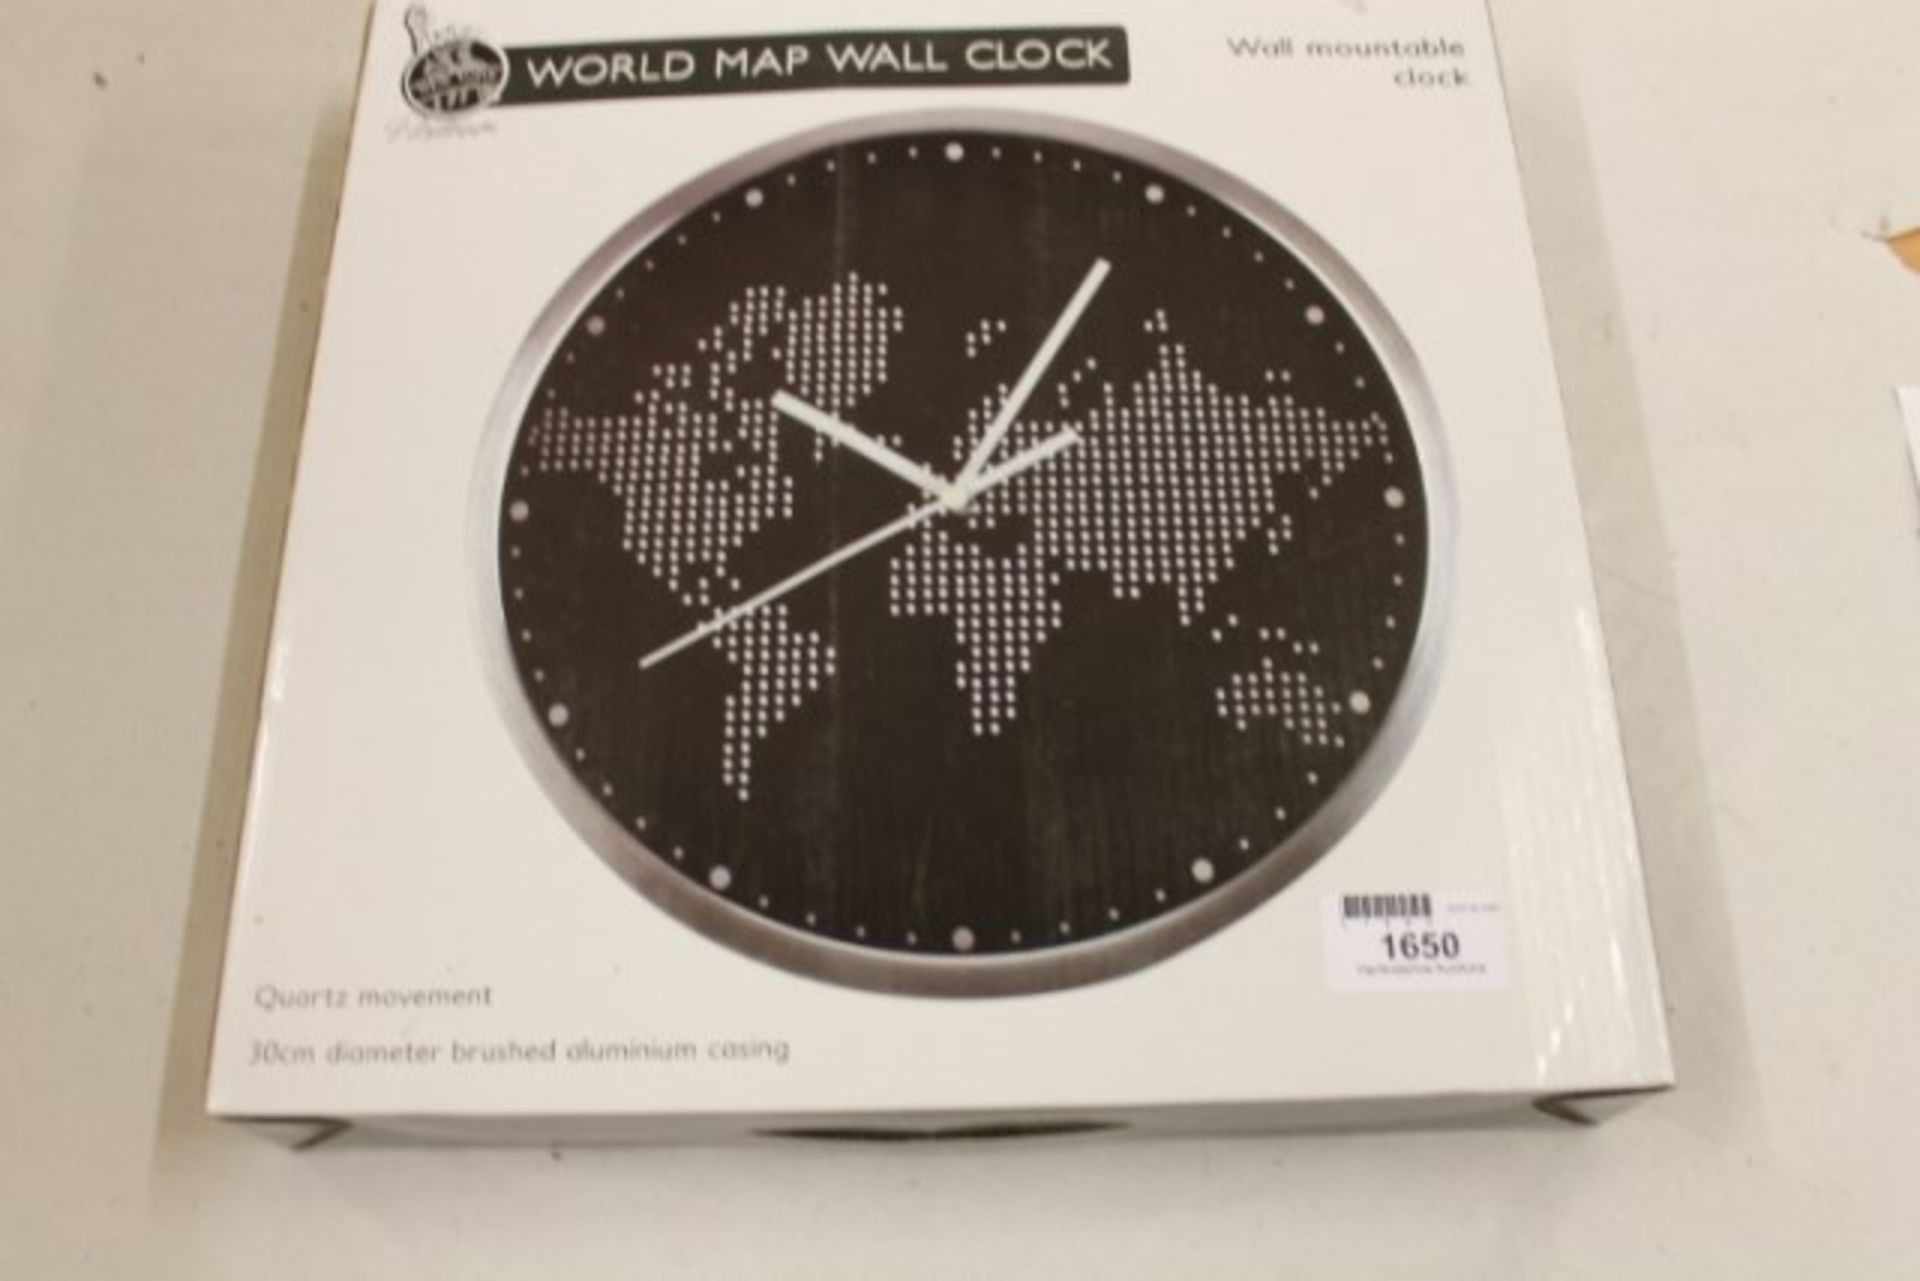 V *TRADE QTY* Grade A Brushed Aluminium Cased 30cm World Map Wall Clock RRP39.99 X 6 YOUR BID